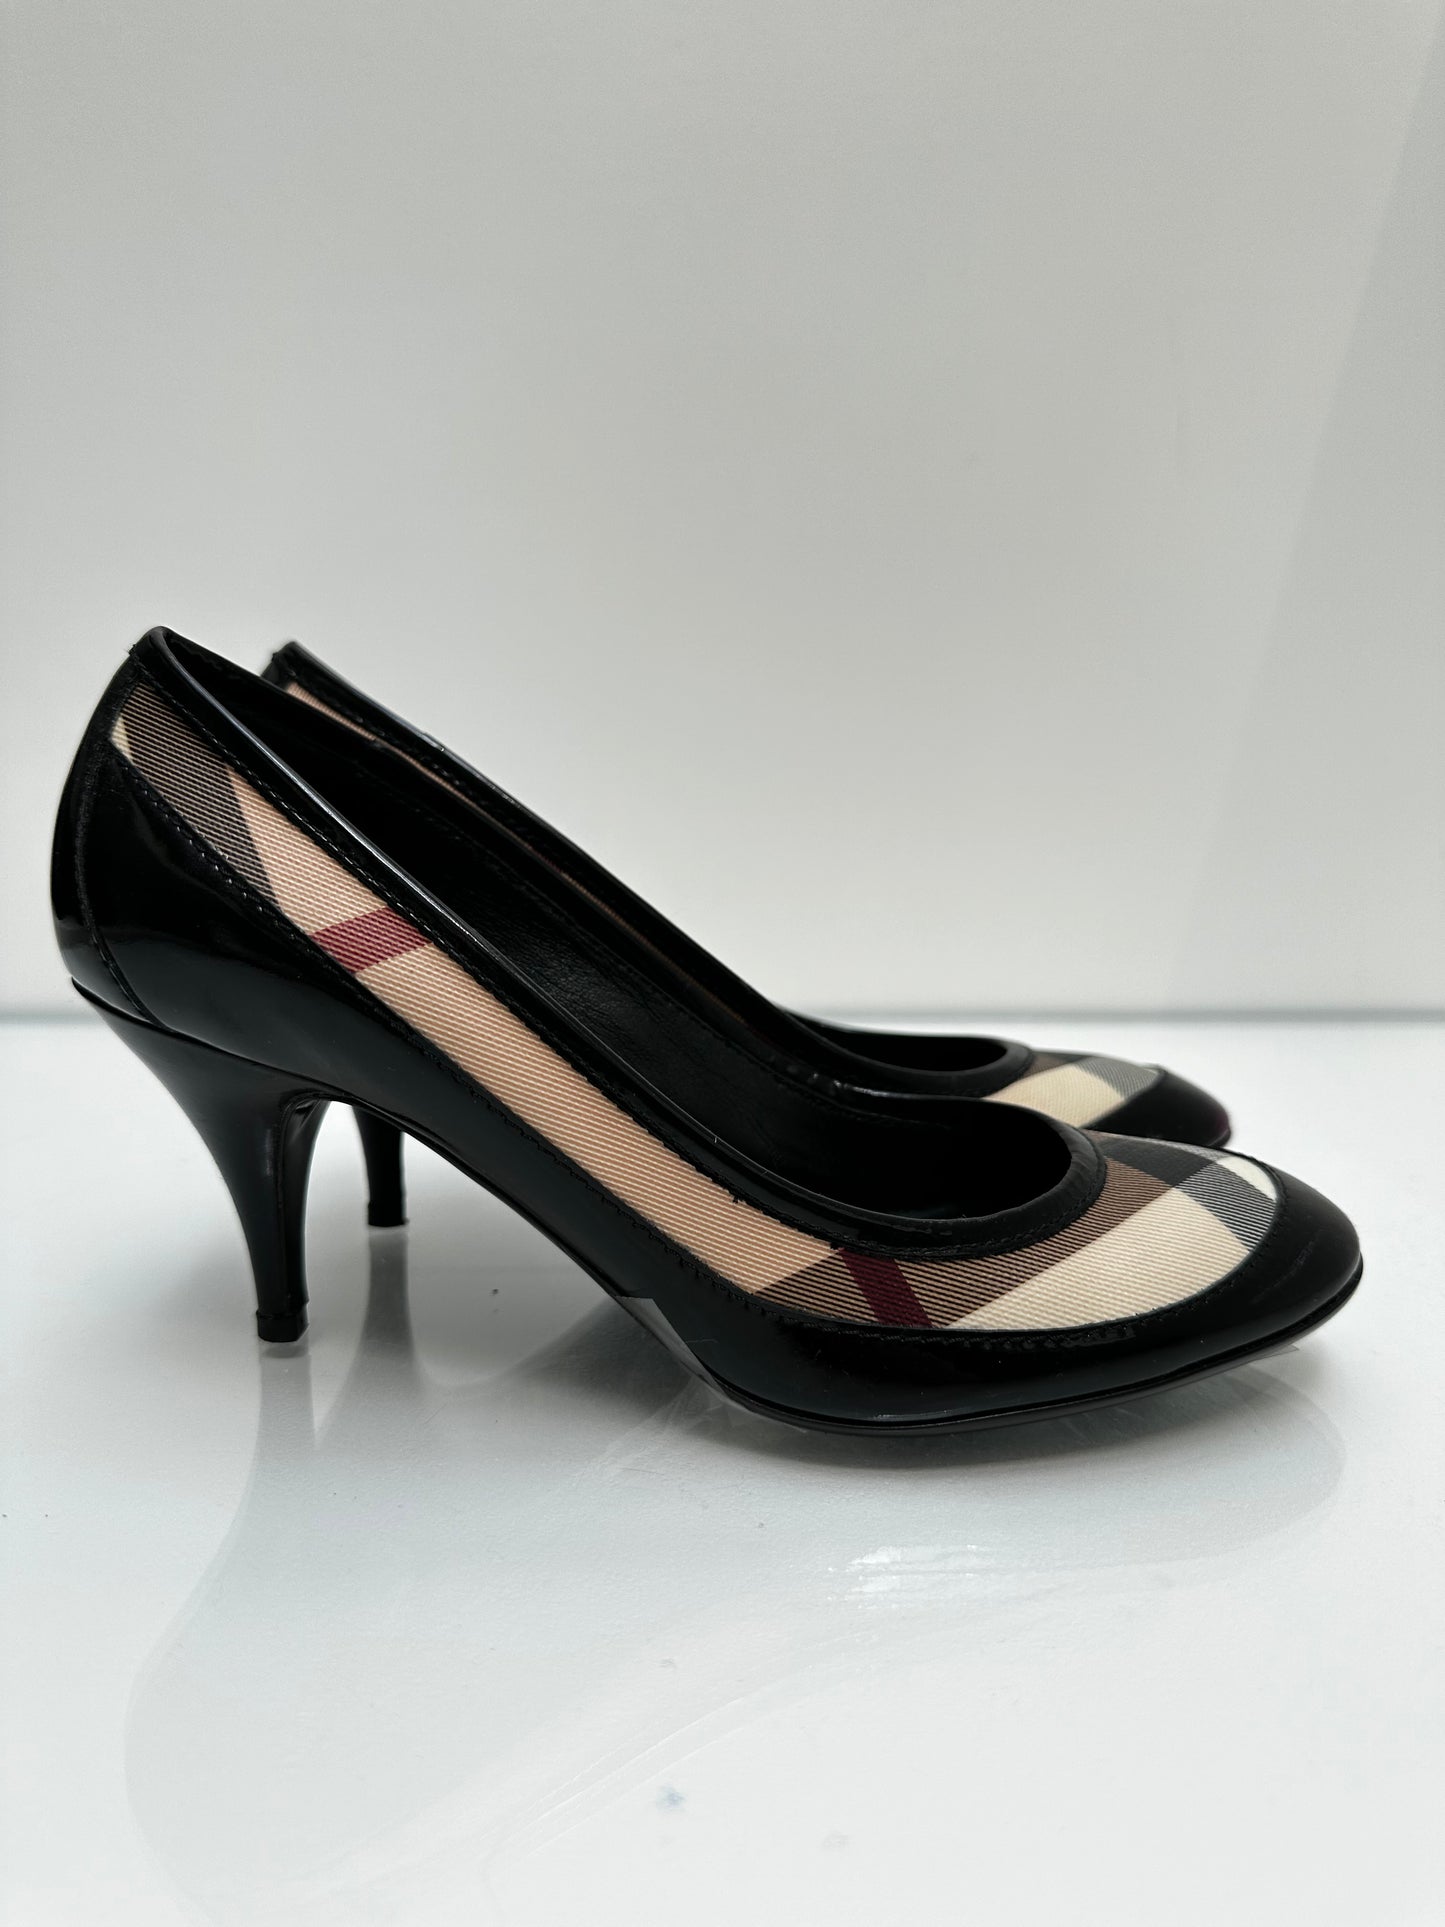 Burberry Black Patent Heels, 37.5